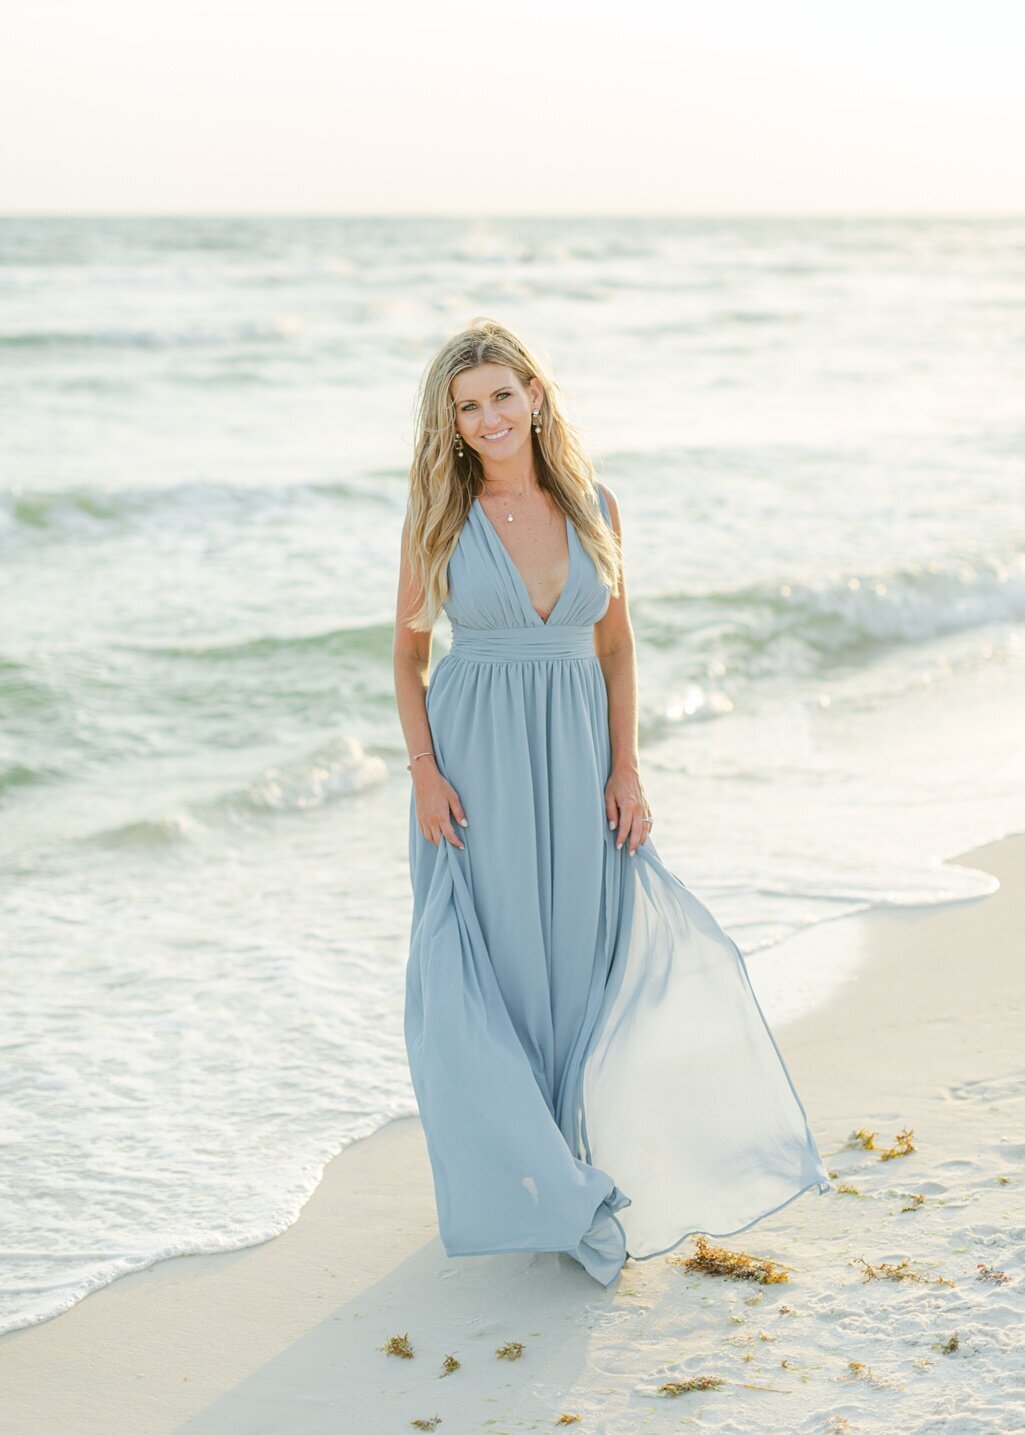 Jessie-Barksdale-Photography_Rosemary-Beach-30a-Florida-Destination-Wedding-Photographer_0177